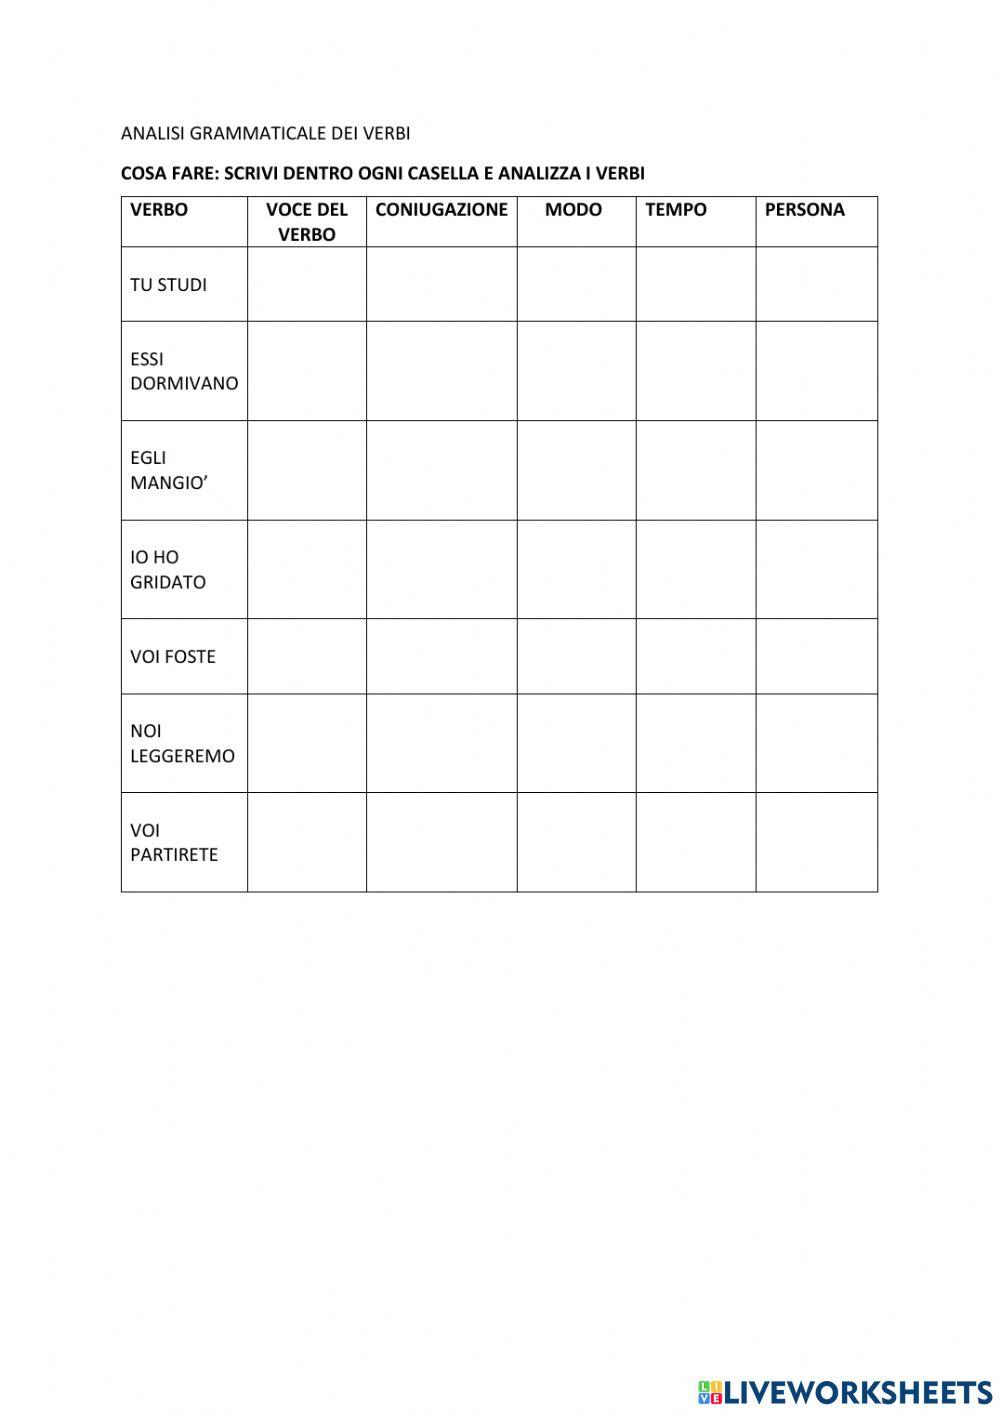 Analisi grammaticale verbi 2 interactive worksheet | Live Worksheets